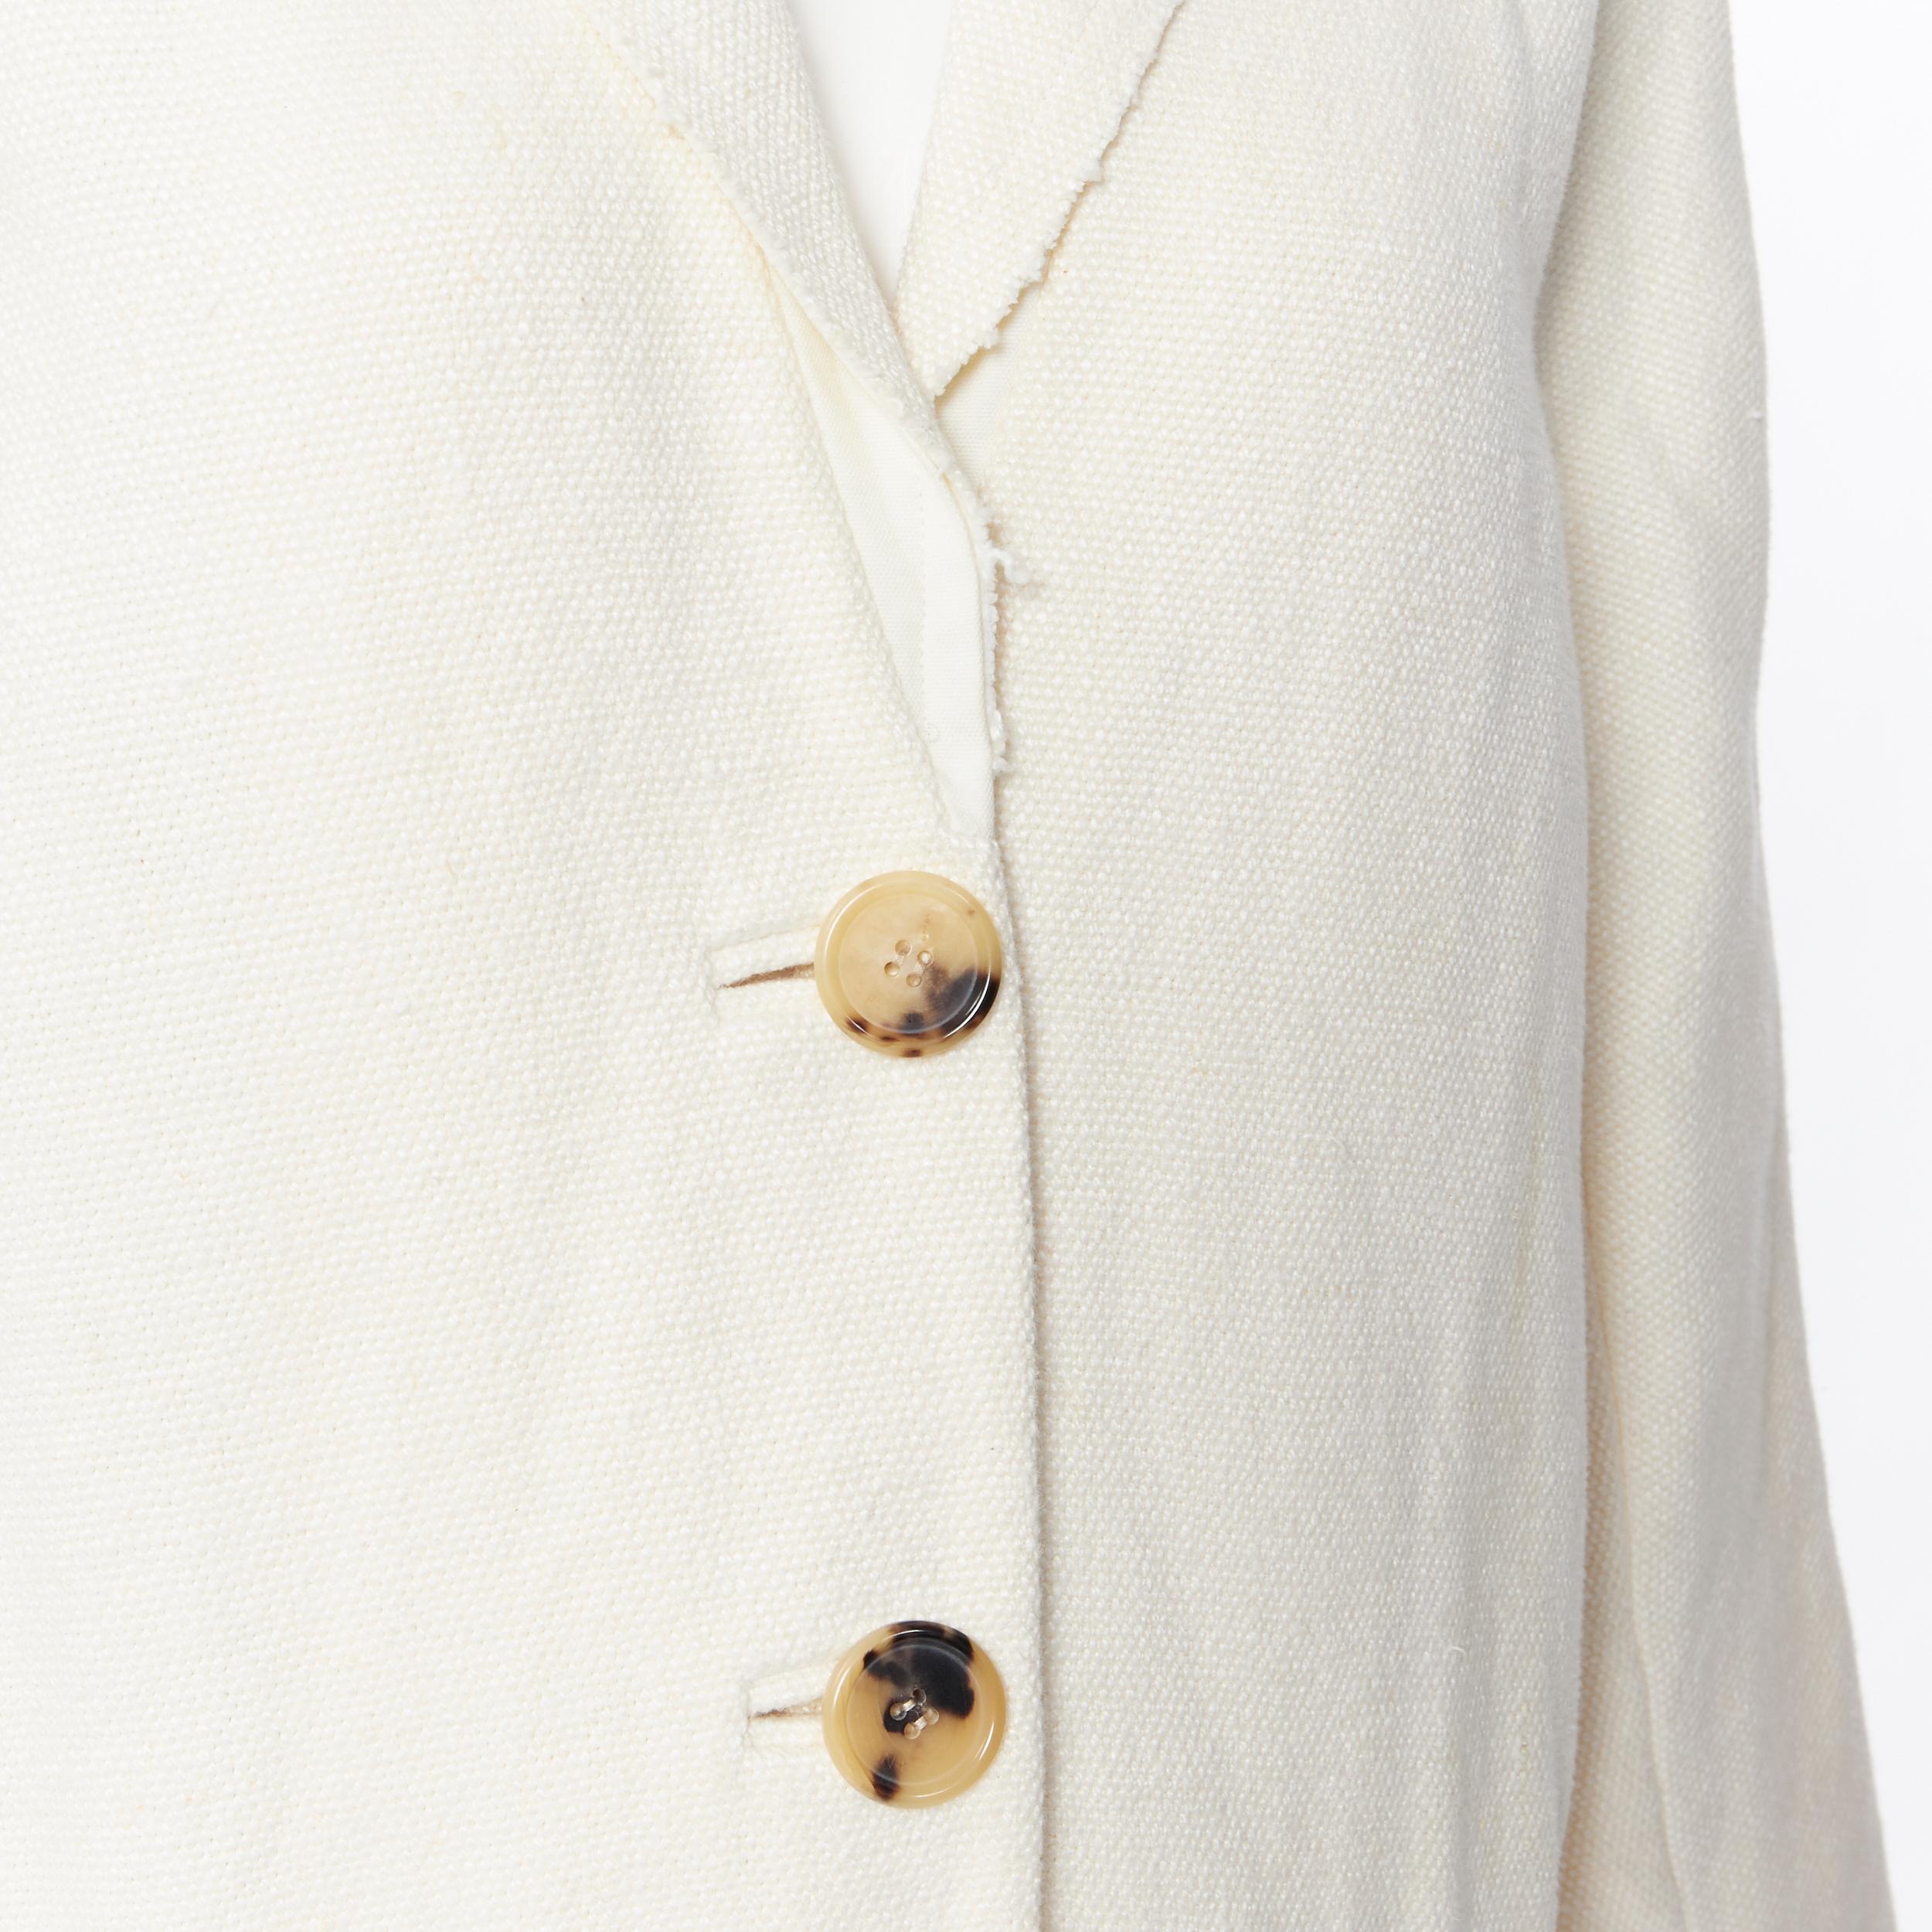 OLD CELINE PHOEBE PHILO 100% linen raw frayed hem beige cocoon coat jacket FR34
Brand: Celine
Model Name / Style: Linen coat
Material: Linen
Color: Beige
Pattern: Solid
Closure: Button
Extra Detail: Dual patch front pockets.
Made in: